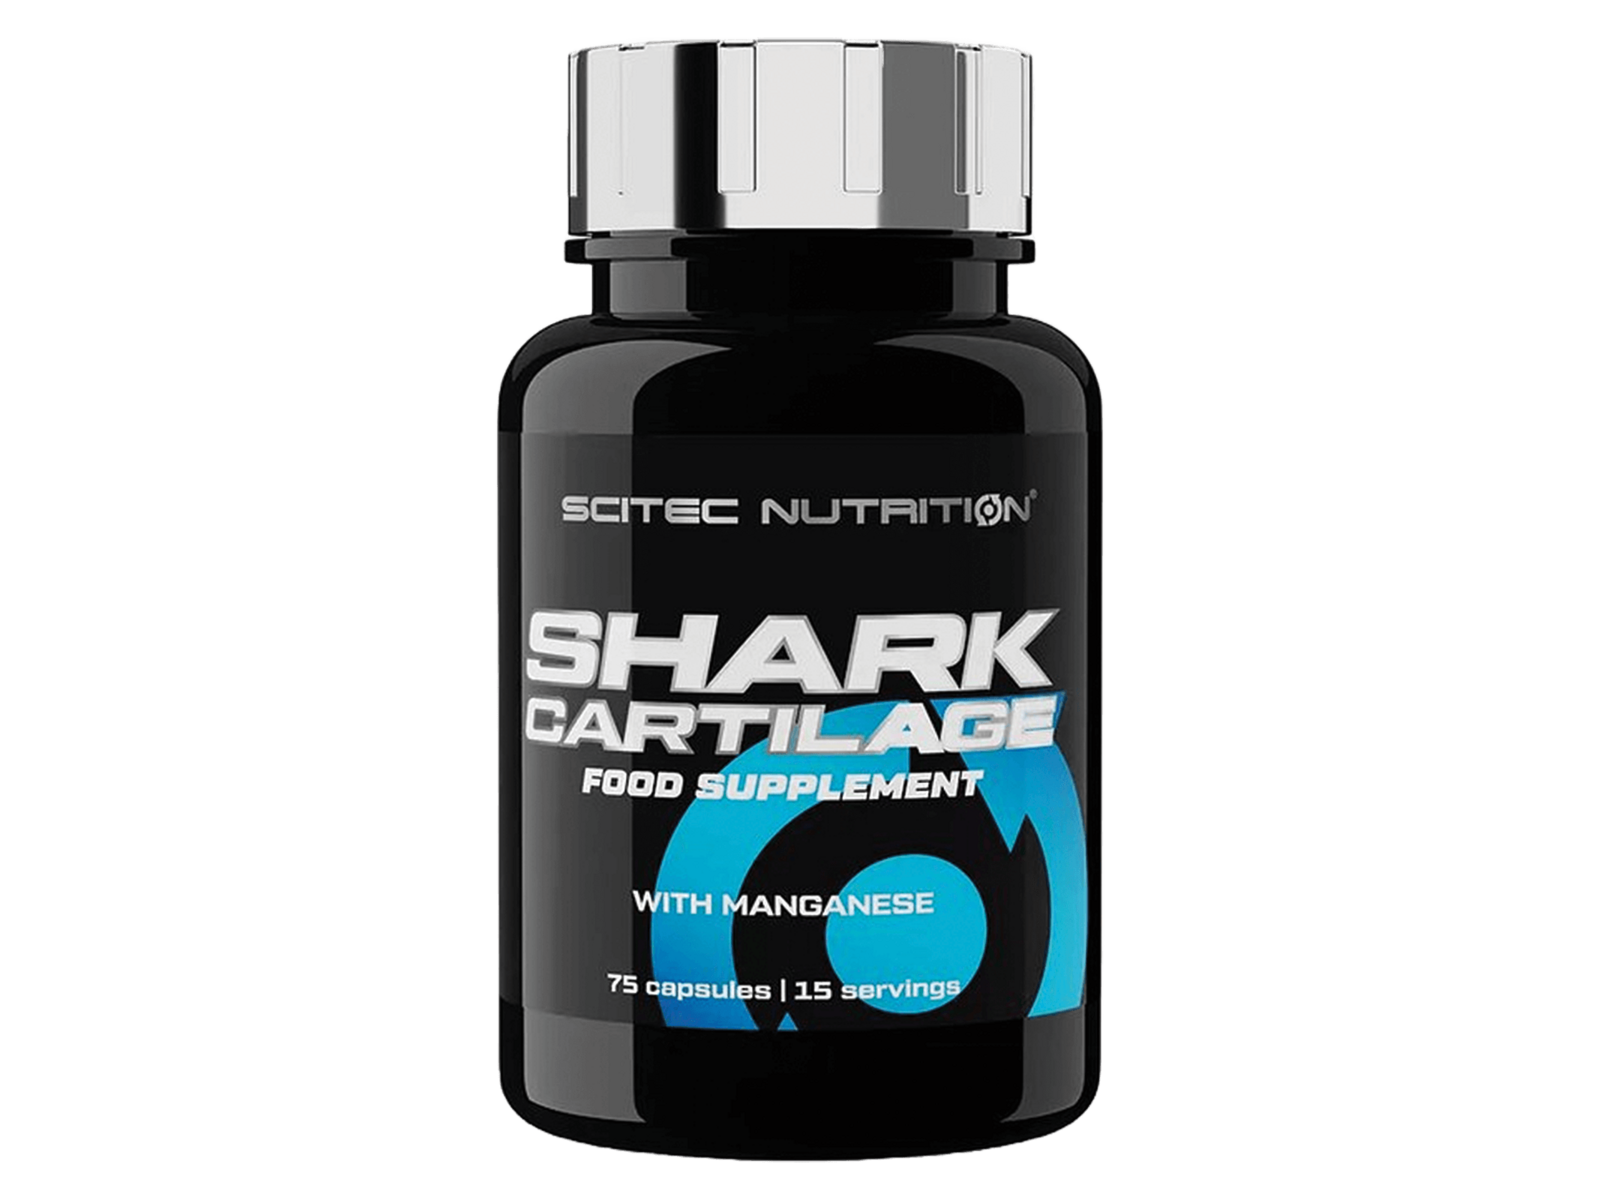 Shark Cartilage - Scitec Nutrition